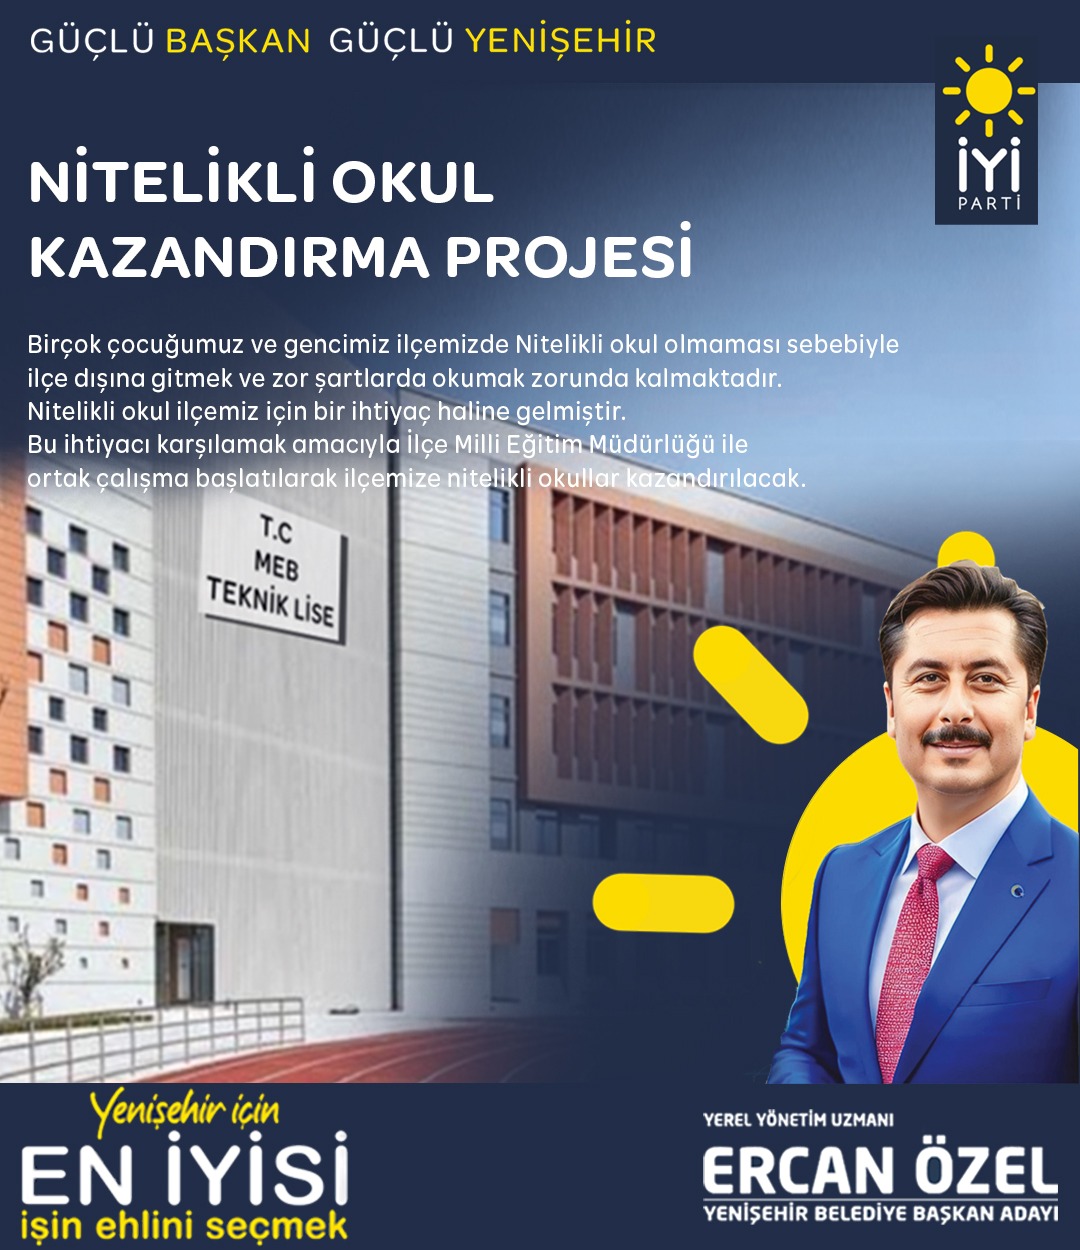 Ercan Özel Proje Nitelikli Okul